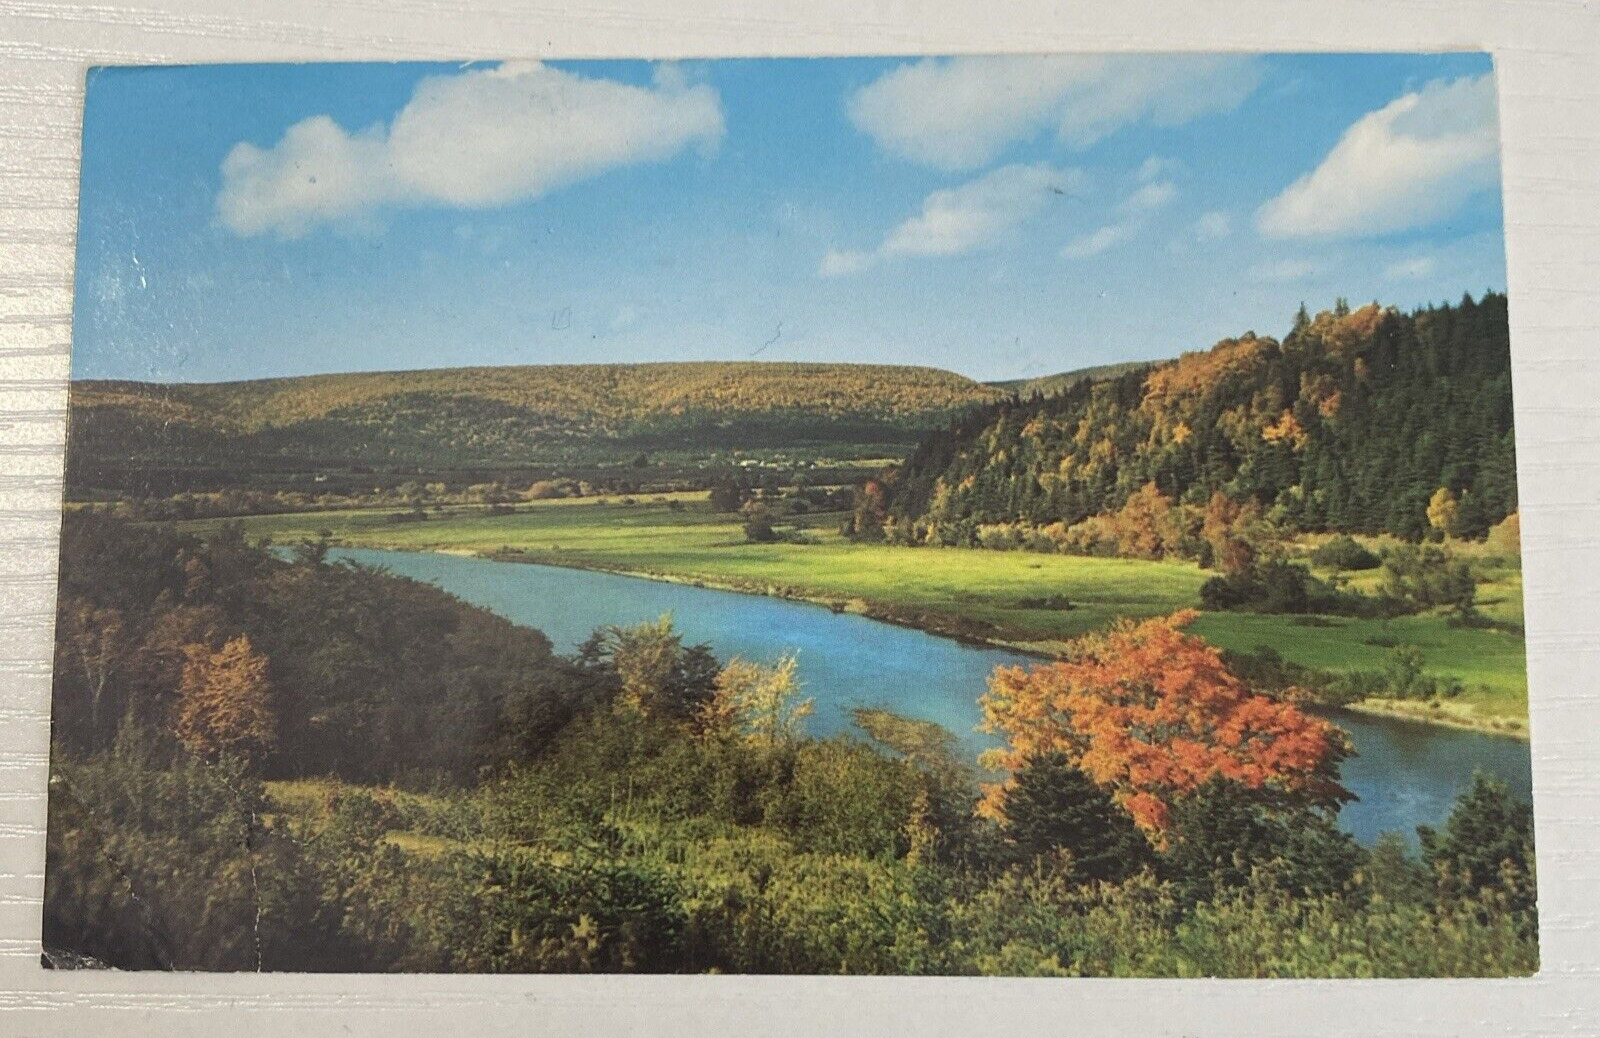 CANADA Postcard The Margaree River - Cape Breton, Nova Scotia c1960s vintage C17